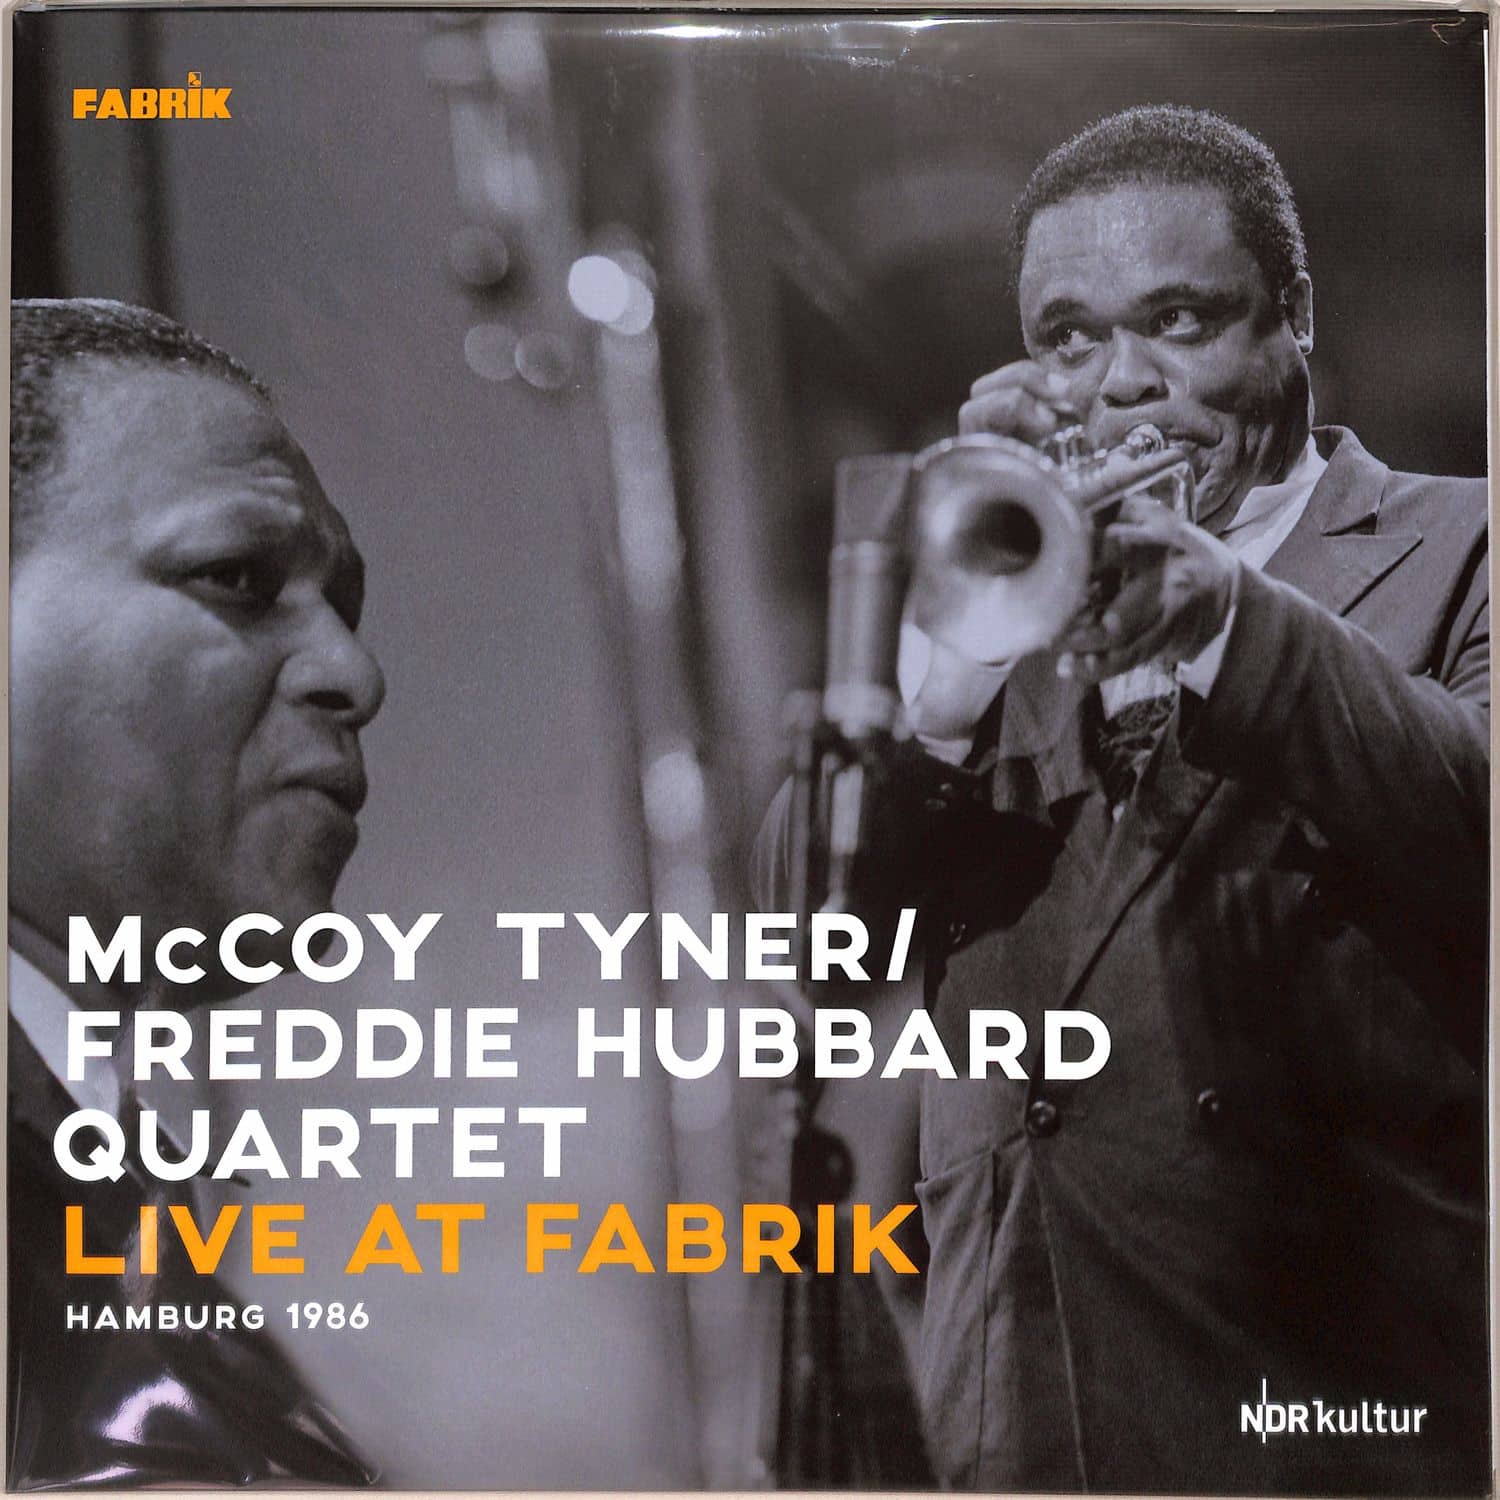 McCoy Tyner / Freddie Hubbard Quartet - LIVE AT FABRIK HAMBURG 1986 